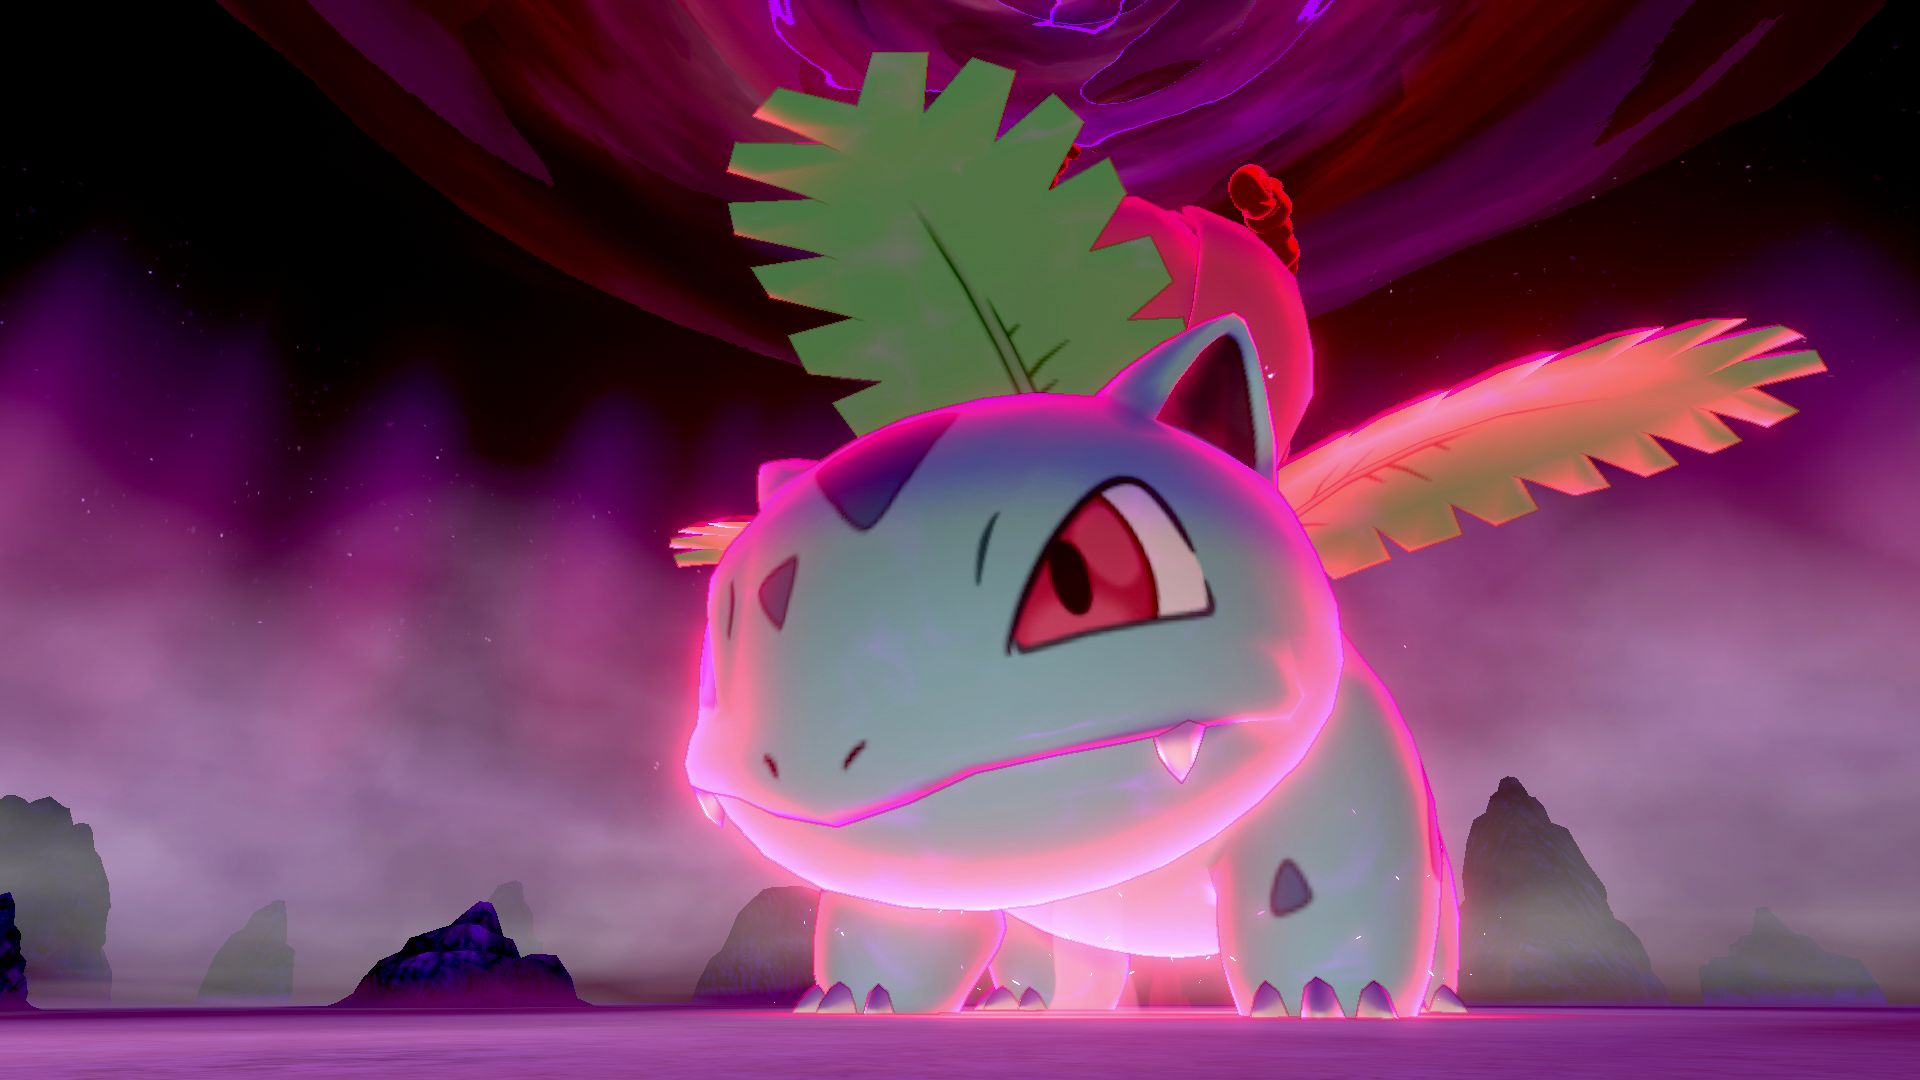 New mythical Pokémon Zarude revealed for Pokémon Sword and Shield - EGM